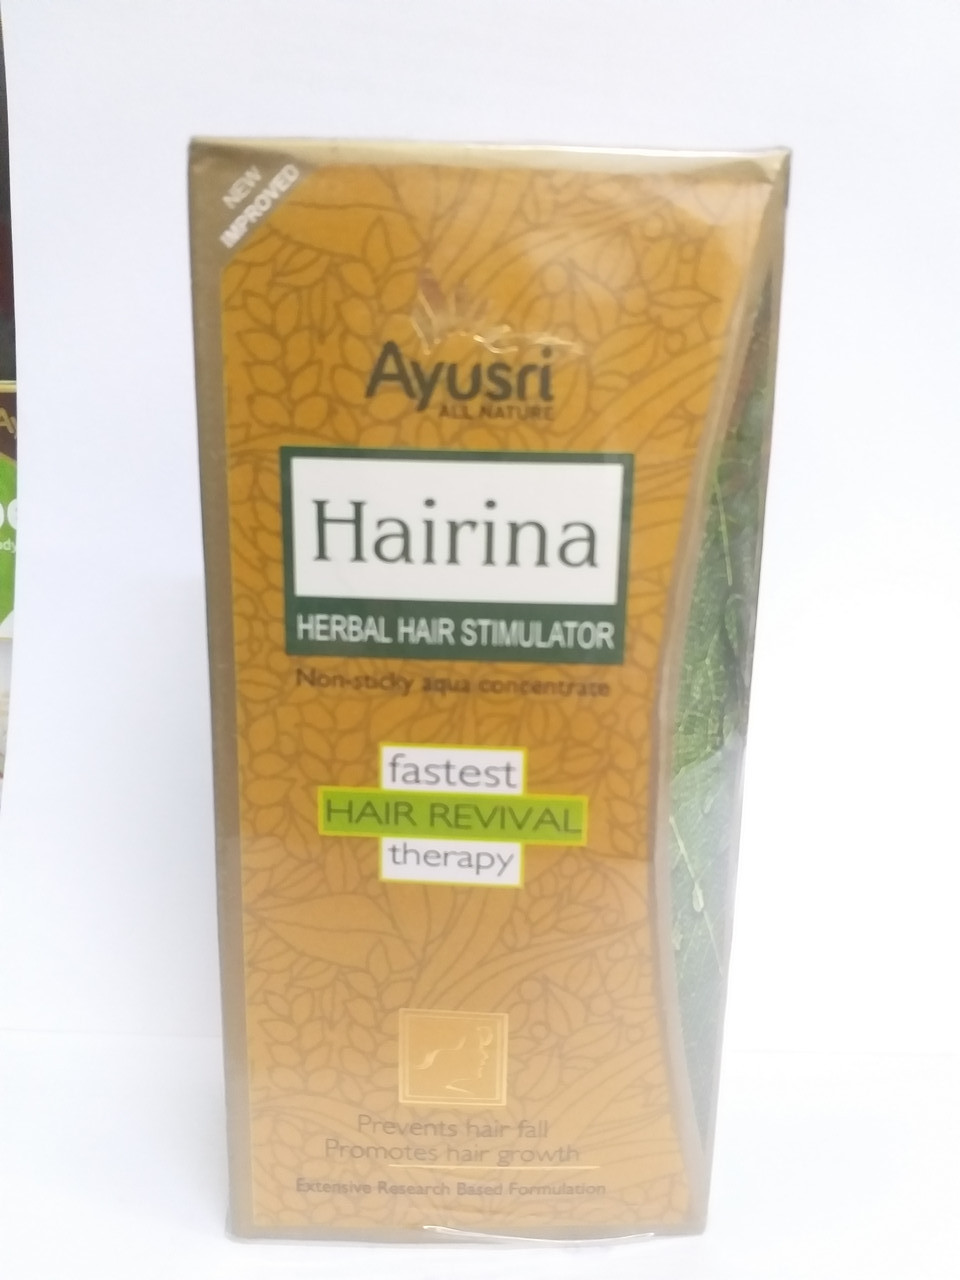 Натуральный тоник для волос Хайрина 120 мл, Ayusri Hairina Herbal Hair Stimulator, фото 1